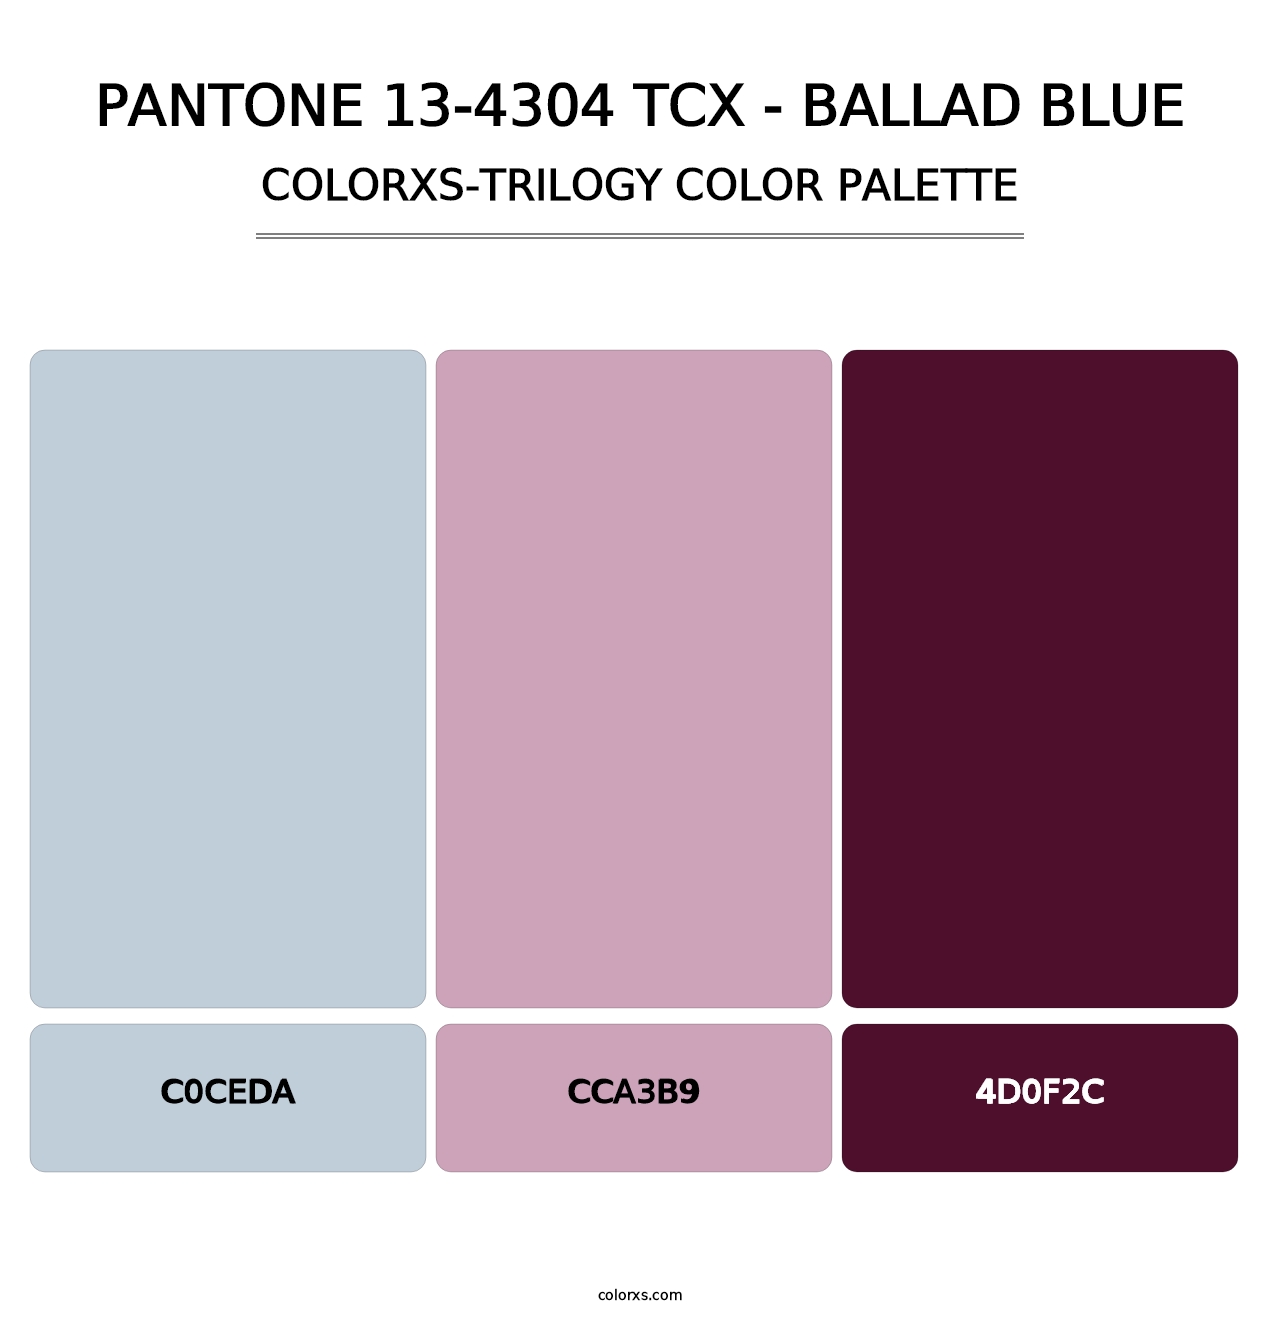 PANTONE 13-4304 TCX - Ballad Blue - Colorxs Trilogy Palette